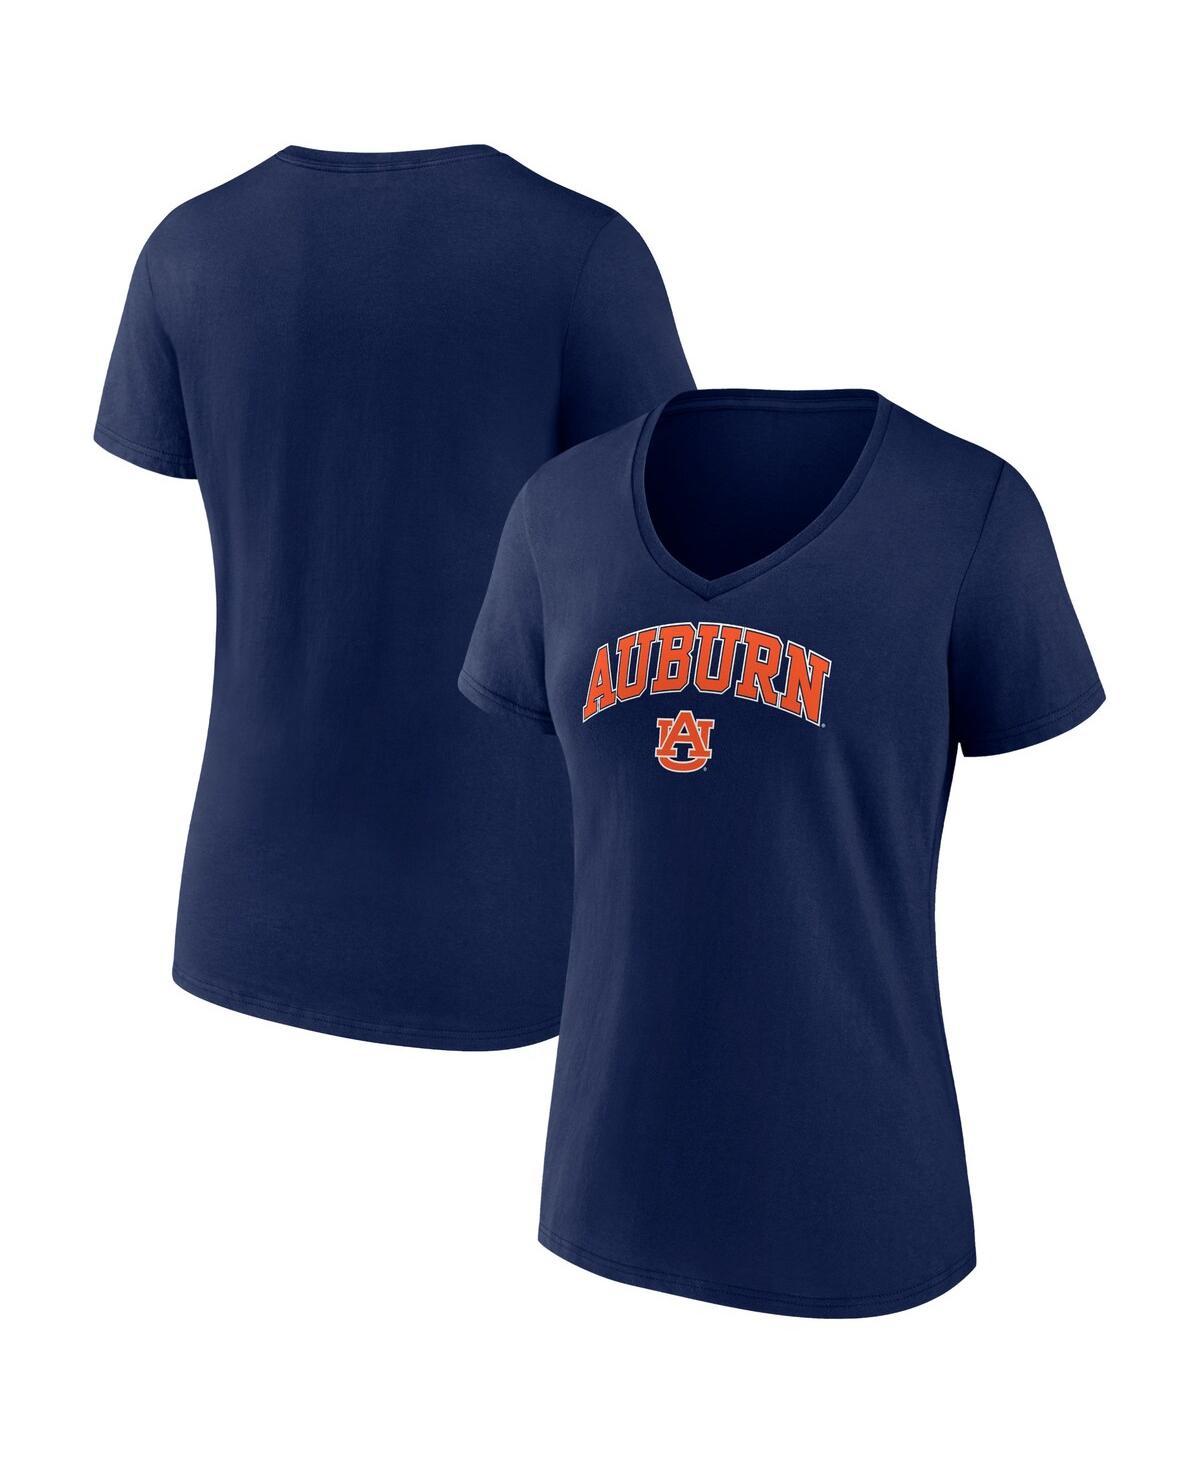 Women's Fanatics Navy Auburn Tigers Evergreen Campus V-Neck T-shirt - Navy